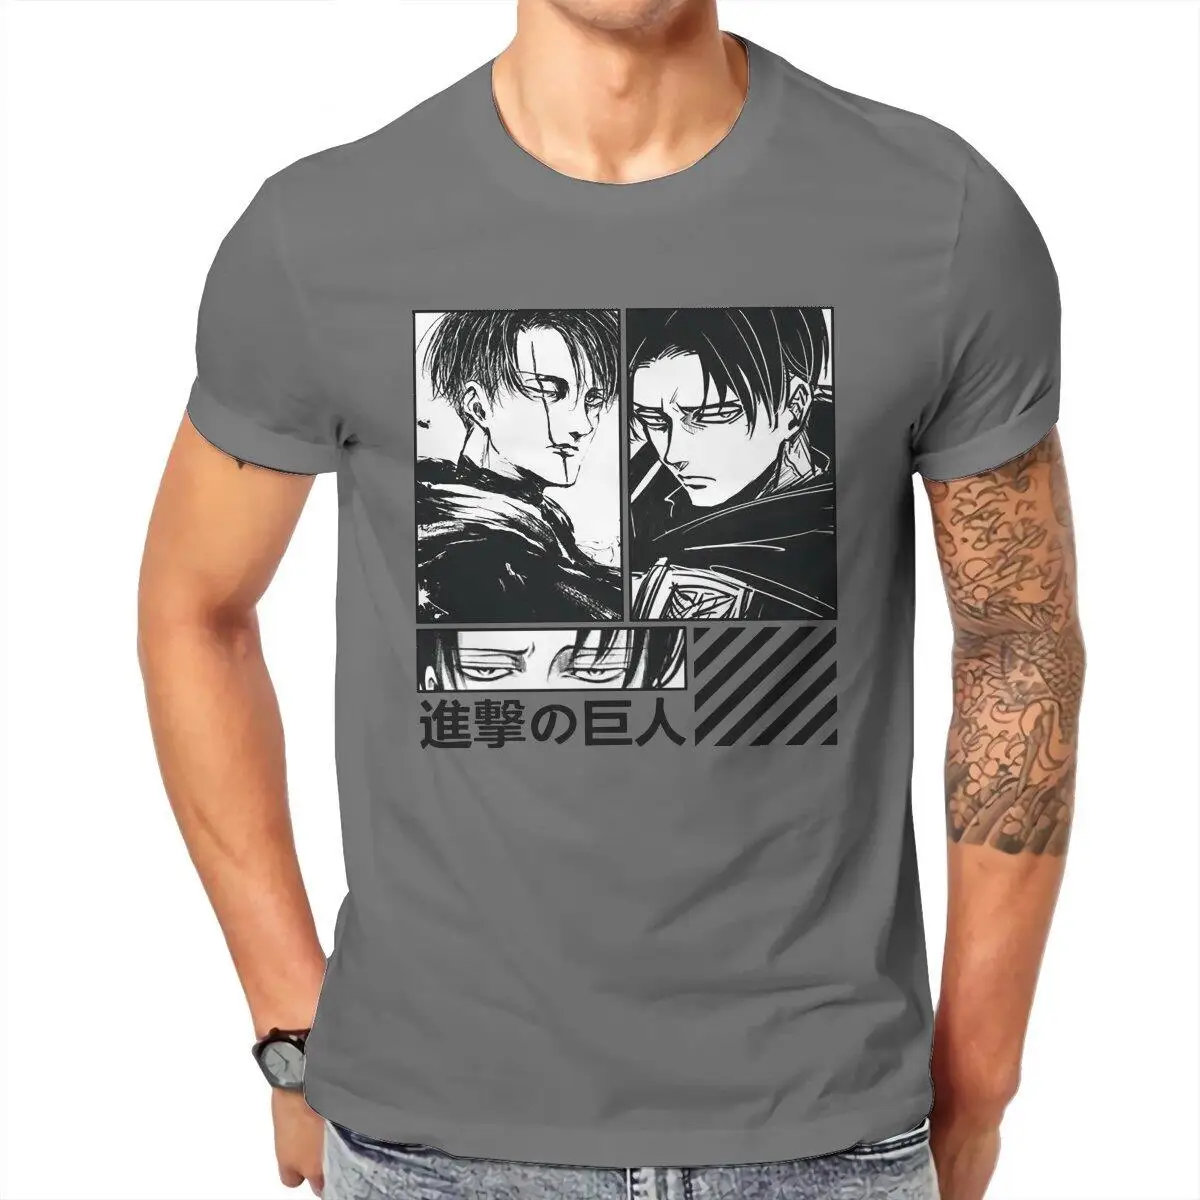 Levi Attack on Titan  T-Shirt Men Japanese Anime Shingeki No Kyojin Novelty Cotton Tee Shirt Short Sleeve T Shirt Gift Tops